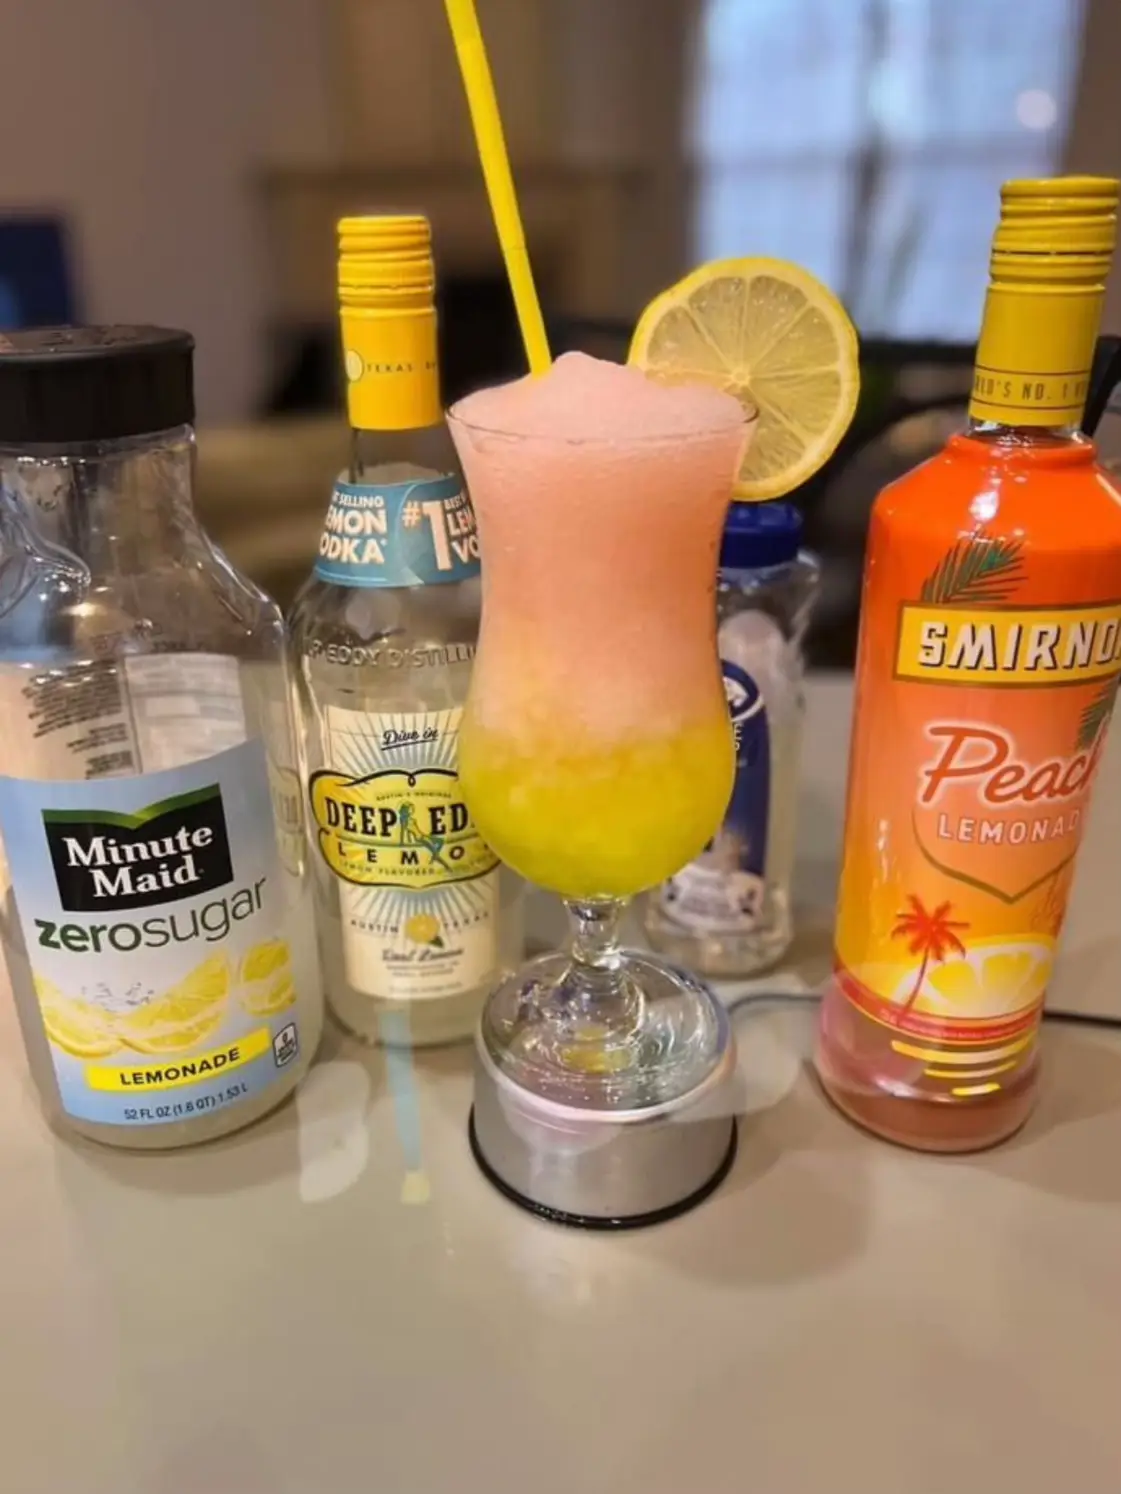  A bottle of Minute Maid zerosugar lemonade